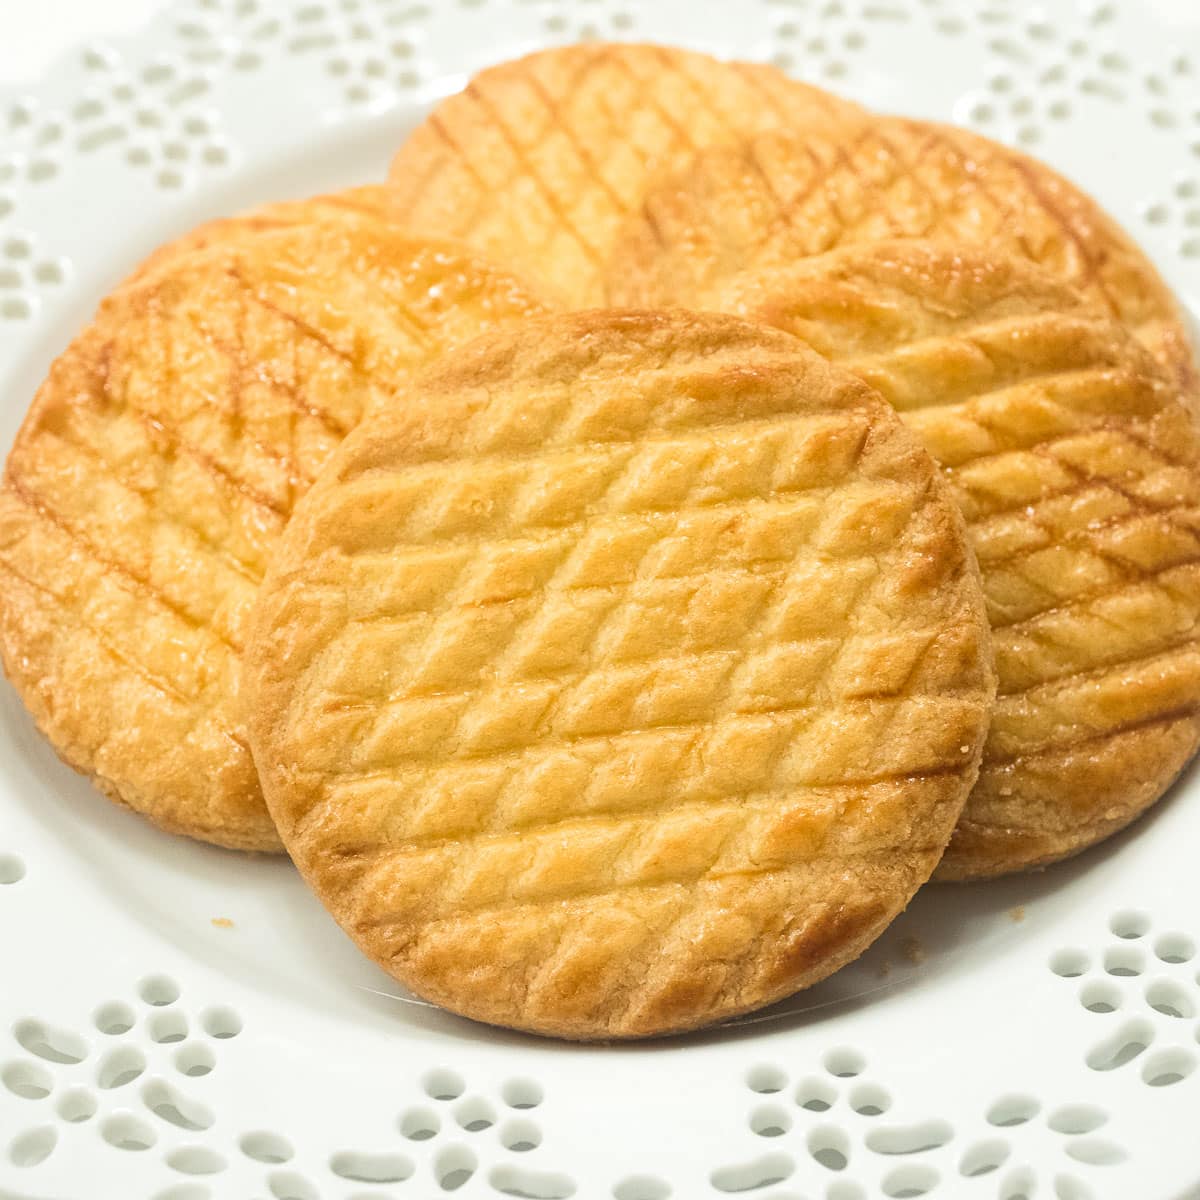 Sablé Breton - Pastries Like a Pro